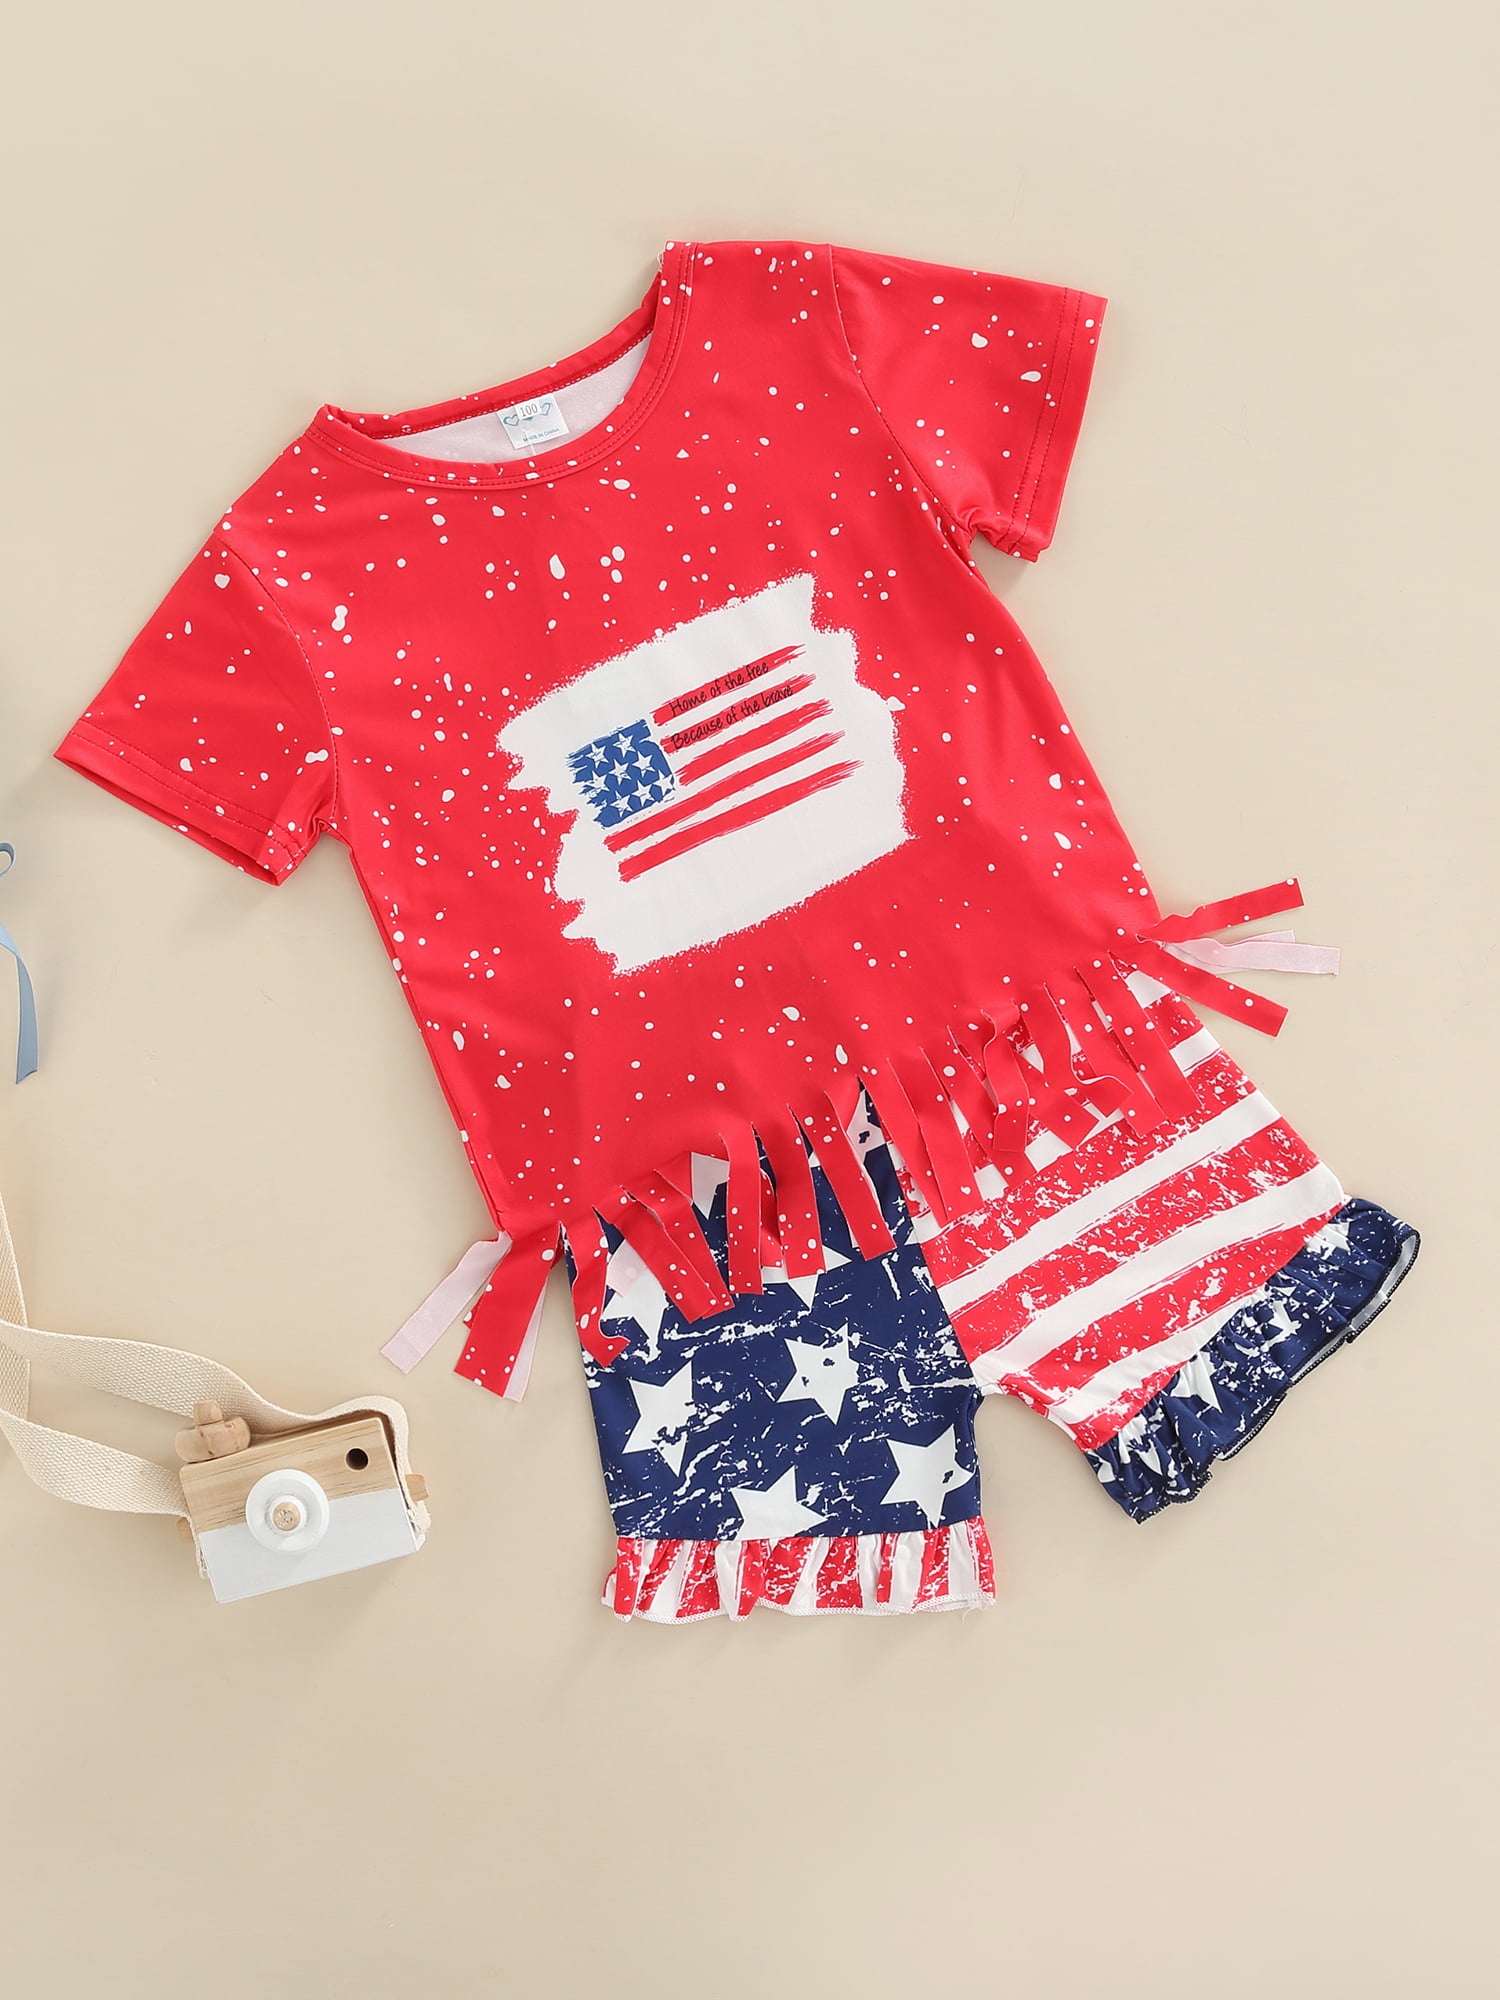 Walmart Brand Toddler Girls Glitter Fringe Tank Top Shirt Size 2T Red White Blue 